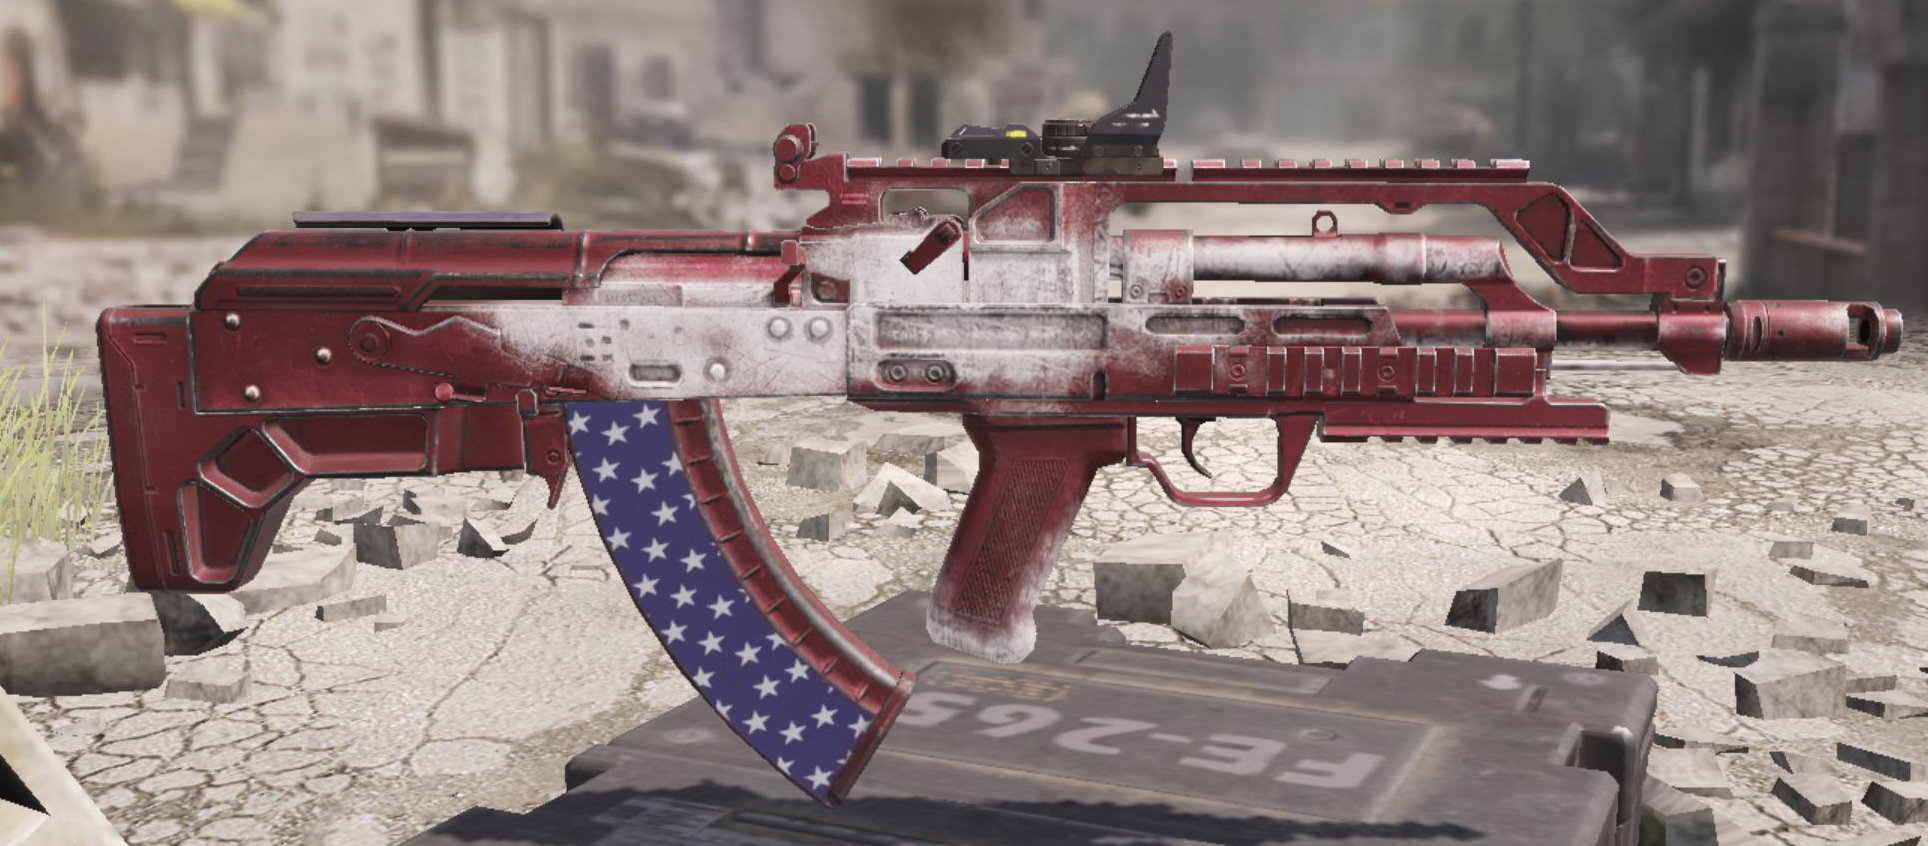 BK57 Firecracker, Epic camo in Call of Duty Mobile